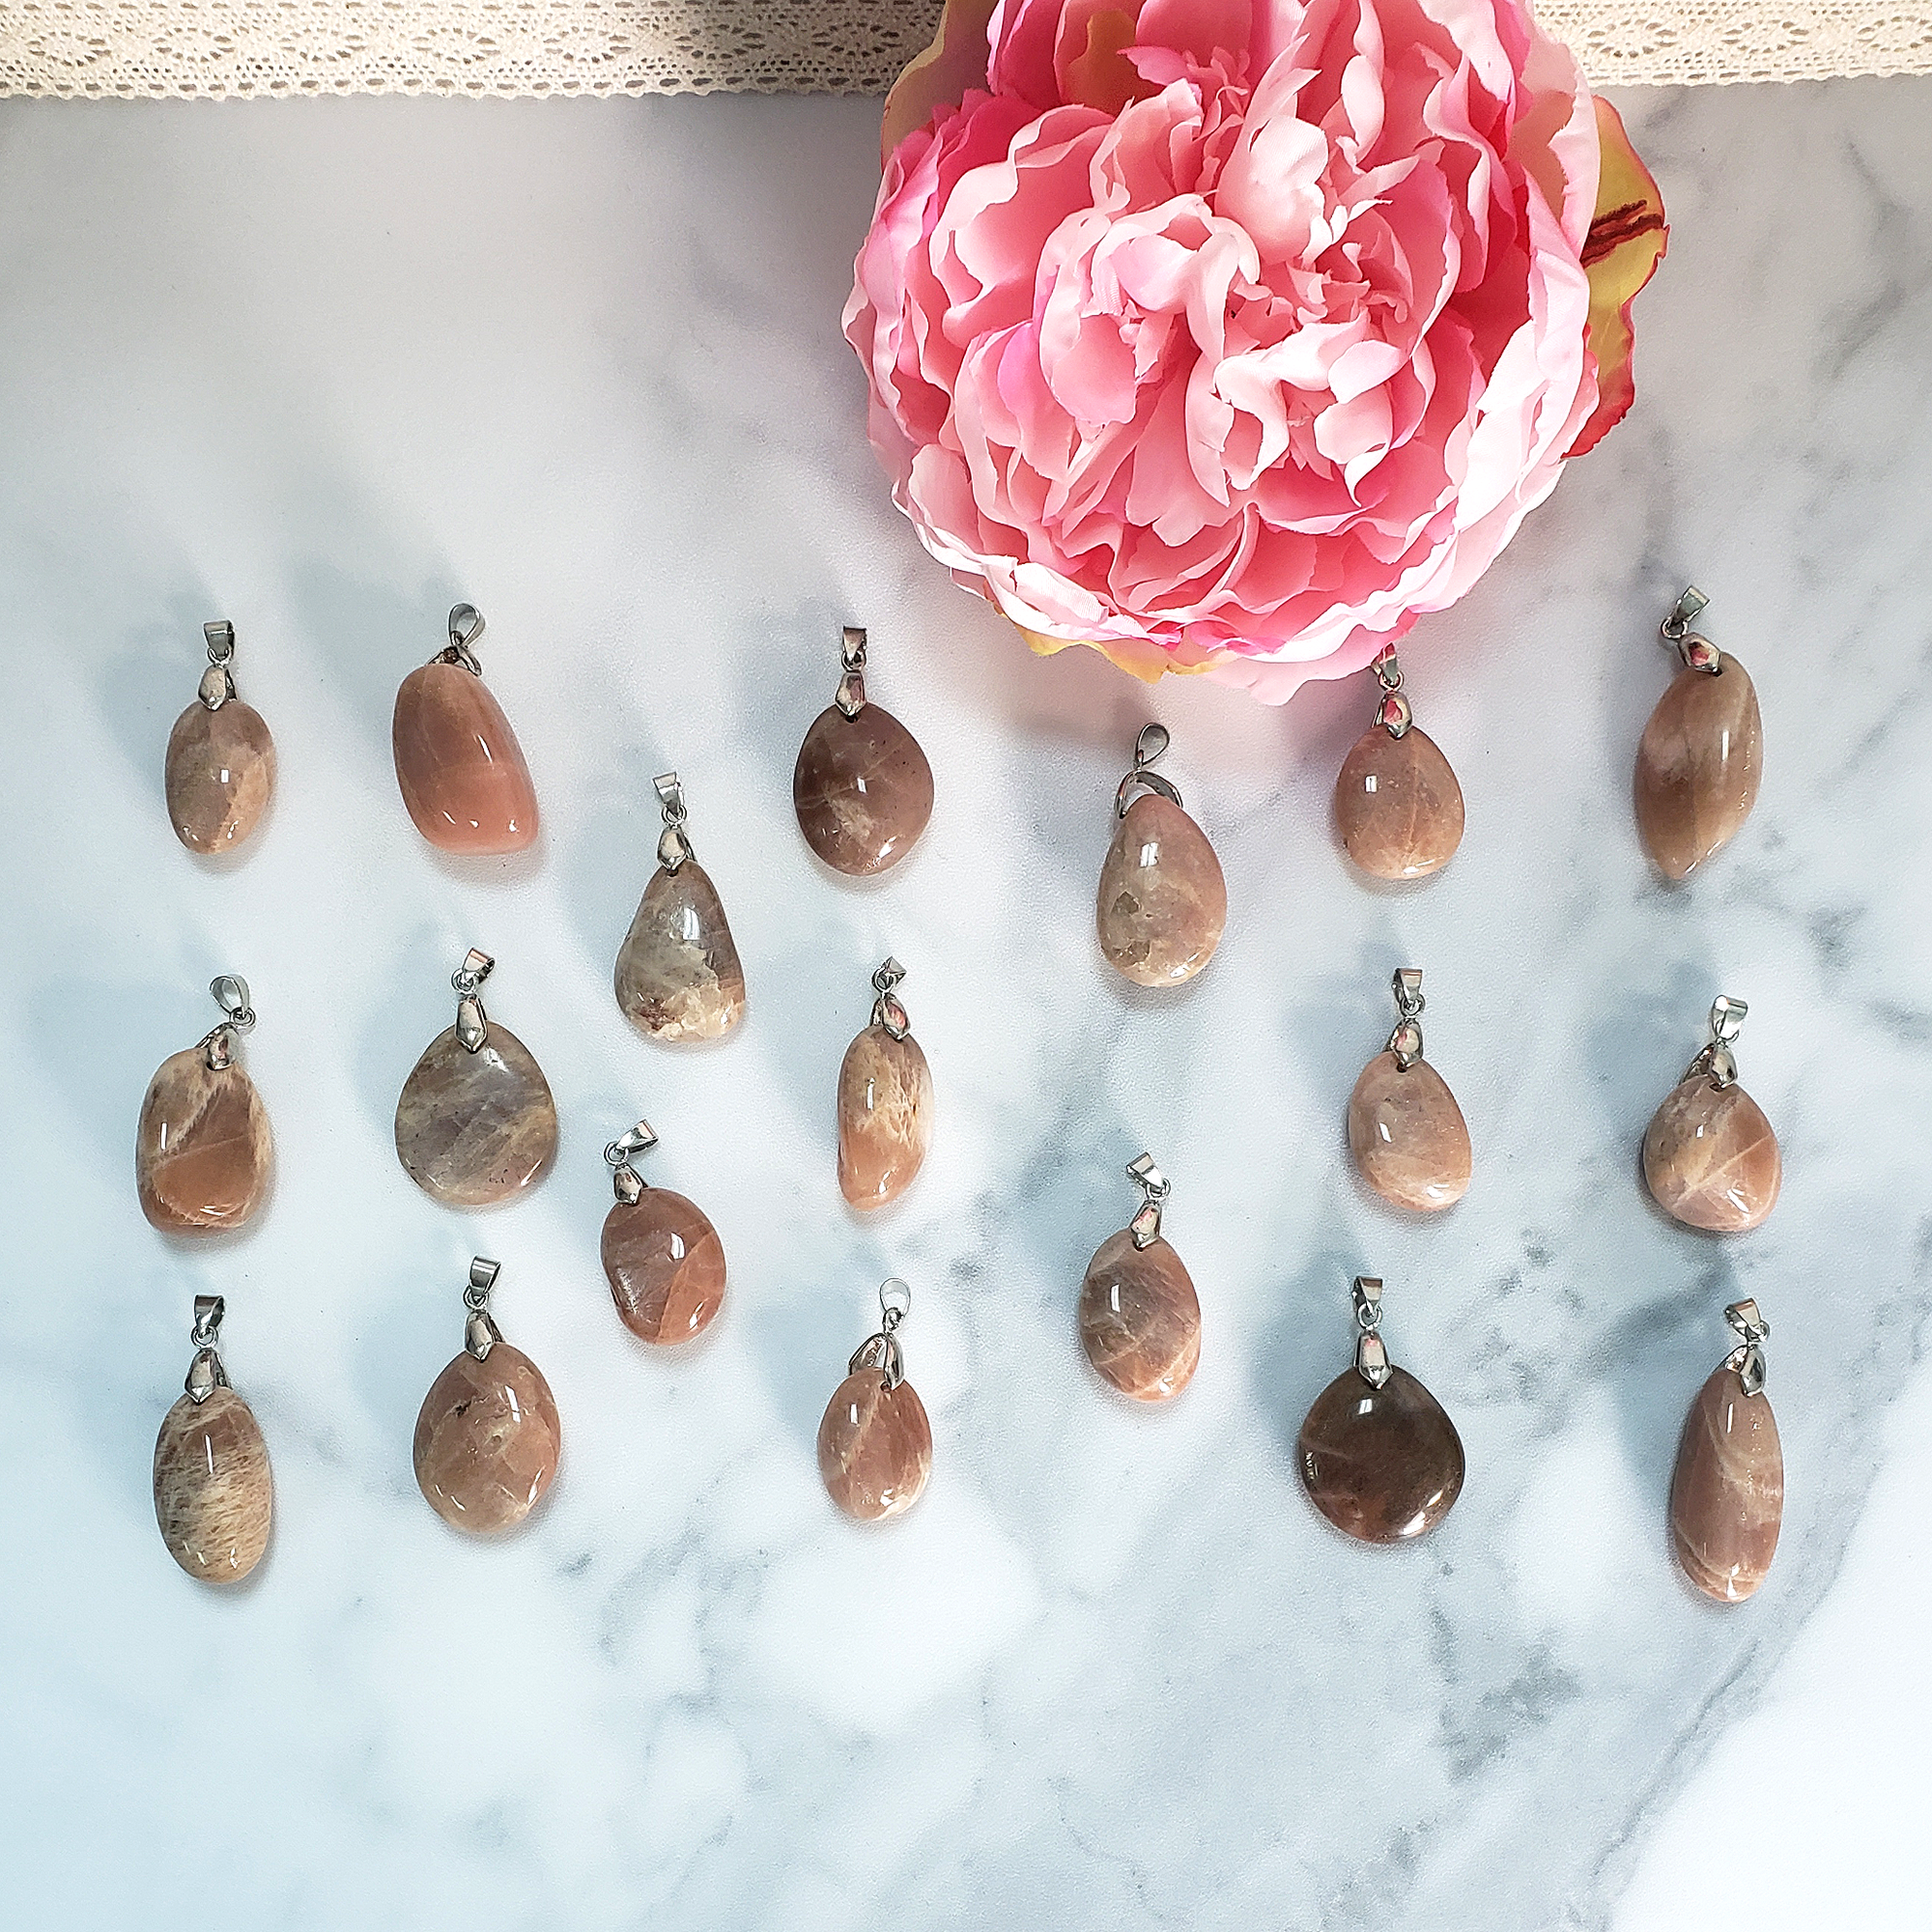 Peach Moonstone Crystal Pendant Natural Gemstone Jewelry - All Pendants on Tile